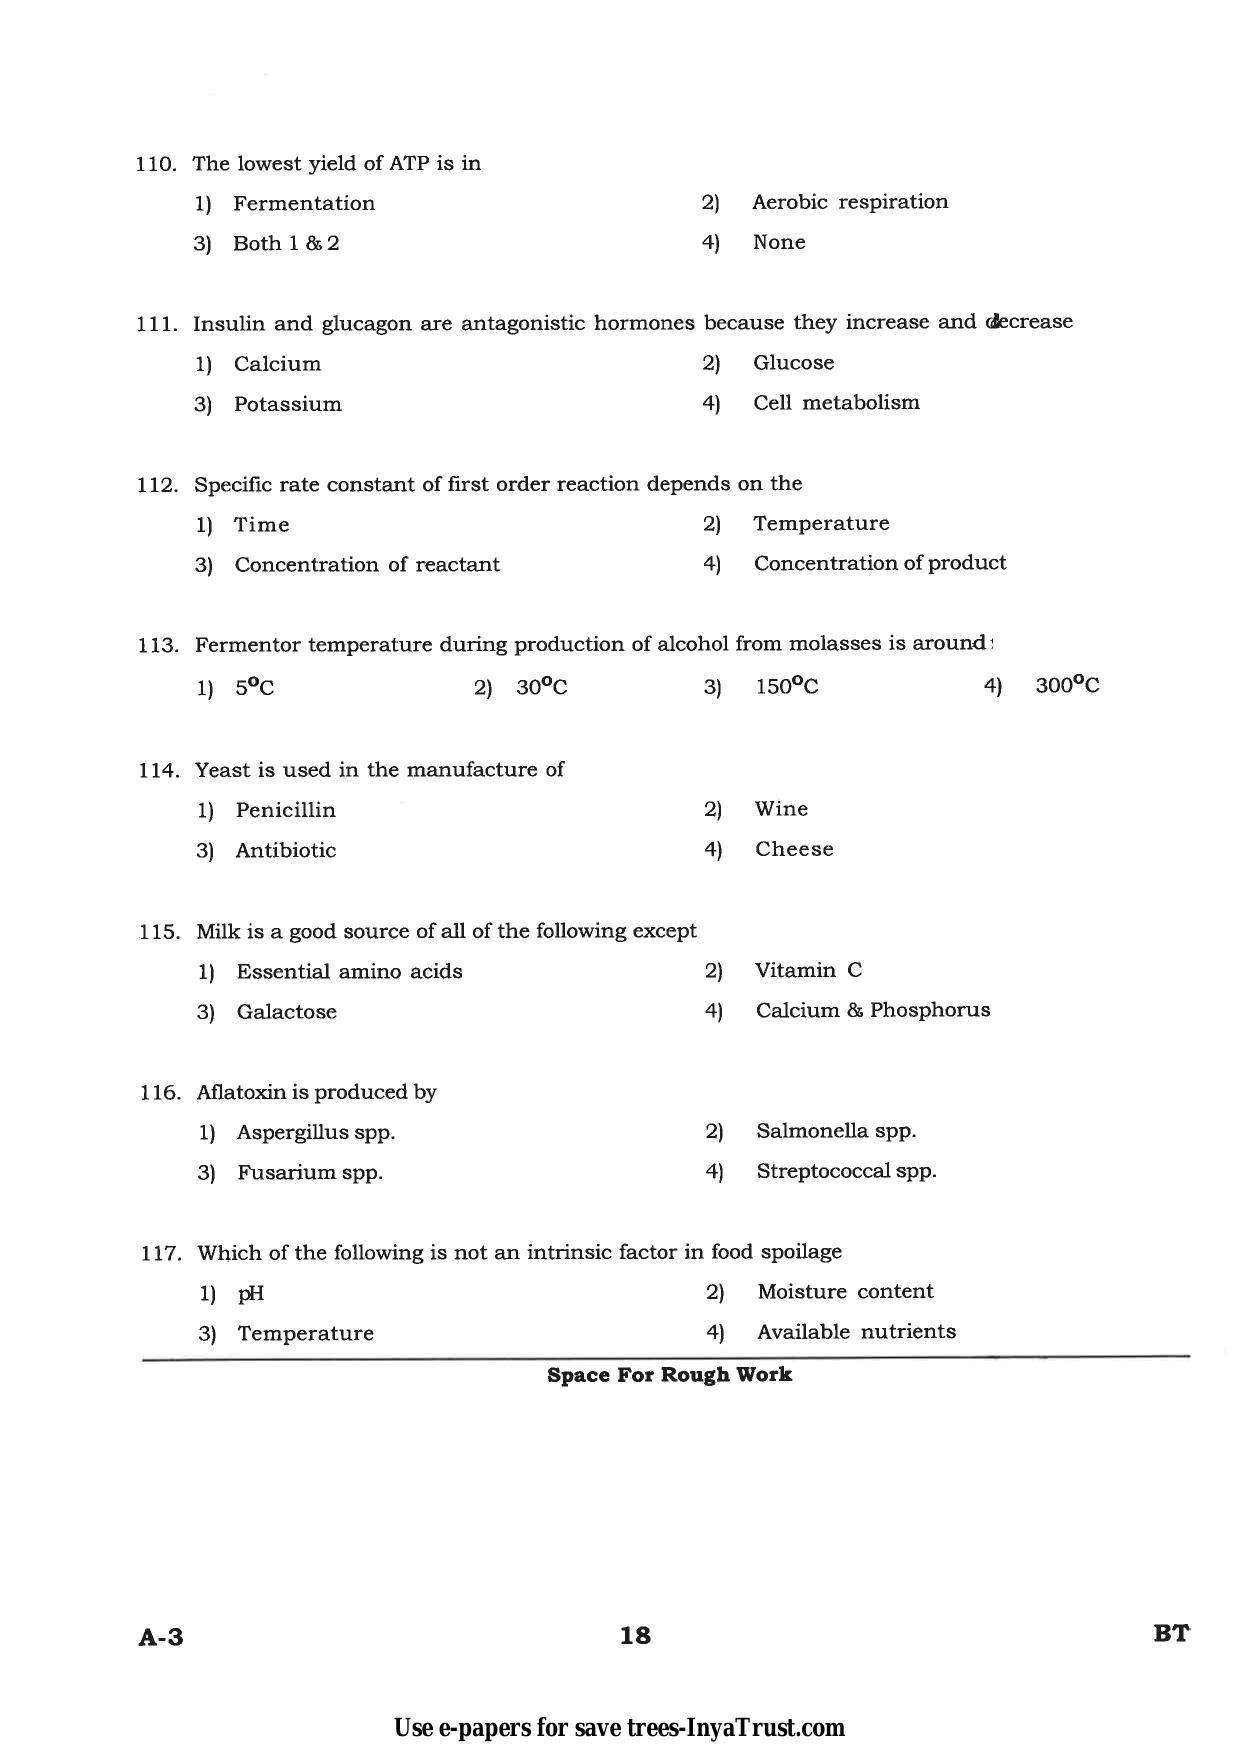 Karnataka Diploma CET- 2015 Biotechnology Question Paper - Page 18